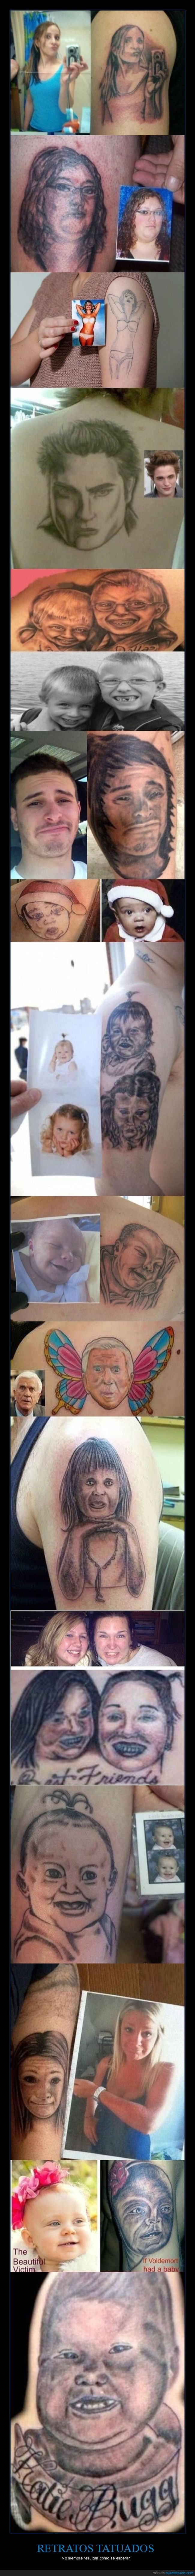 retratos,tatuajes,fails